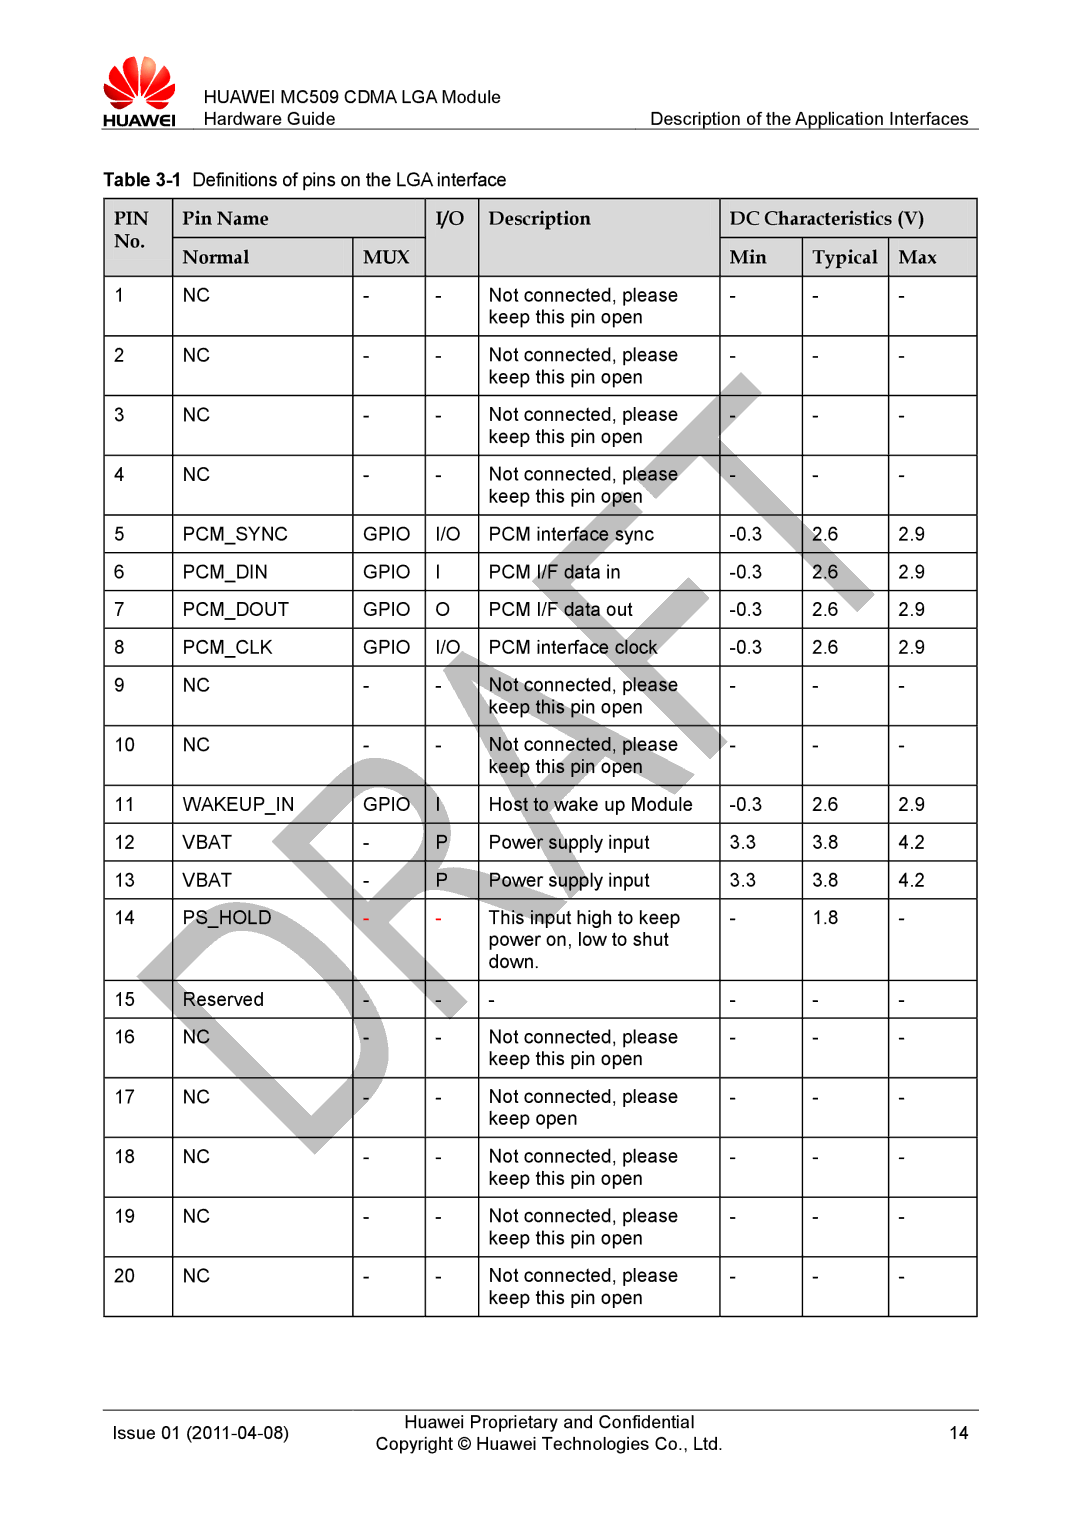 Huawei MC509 CDMA LGA manual Pin Name Description DC Characteristics Normal, Min Typical Max 